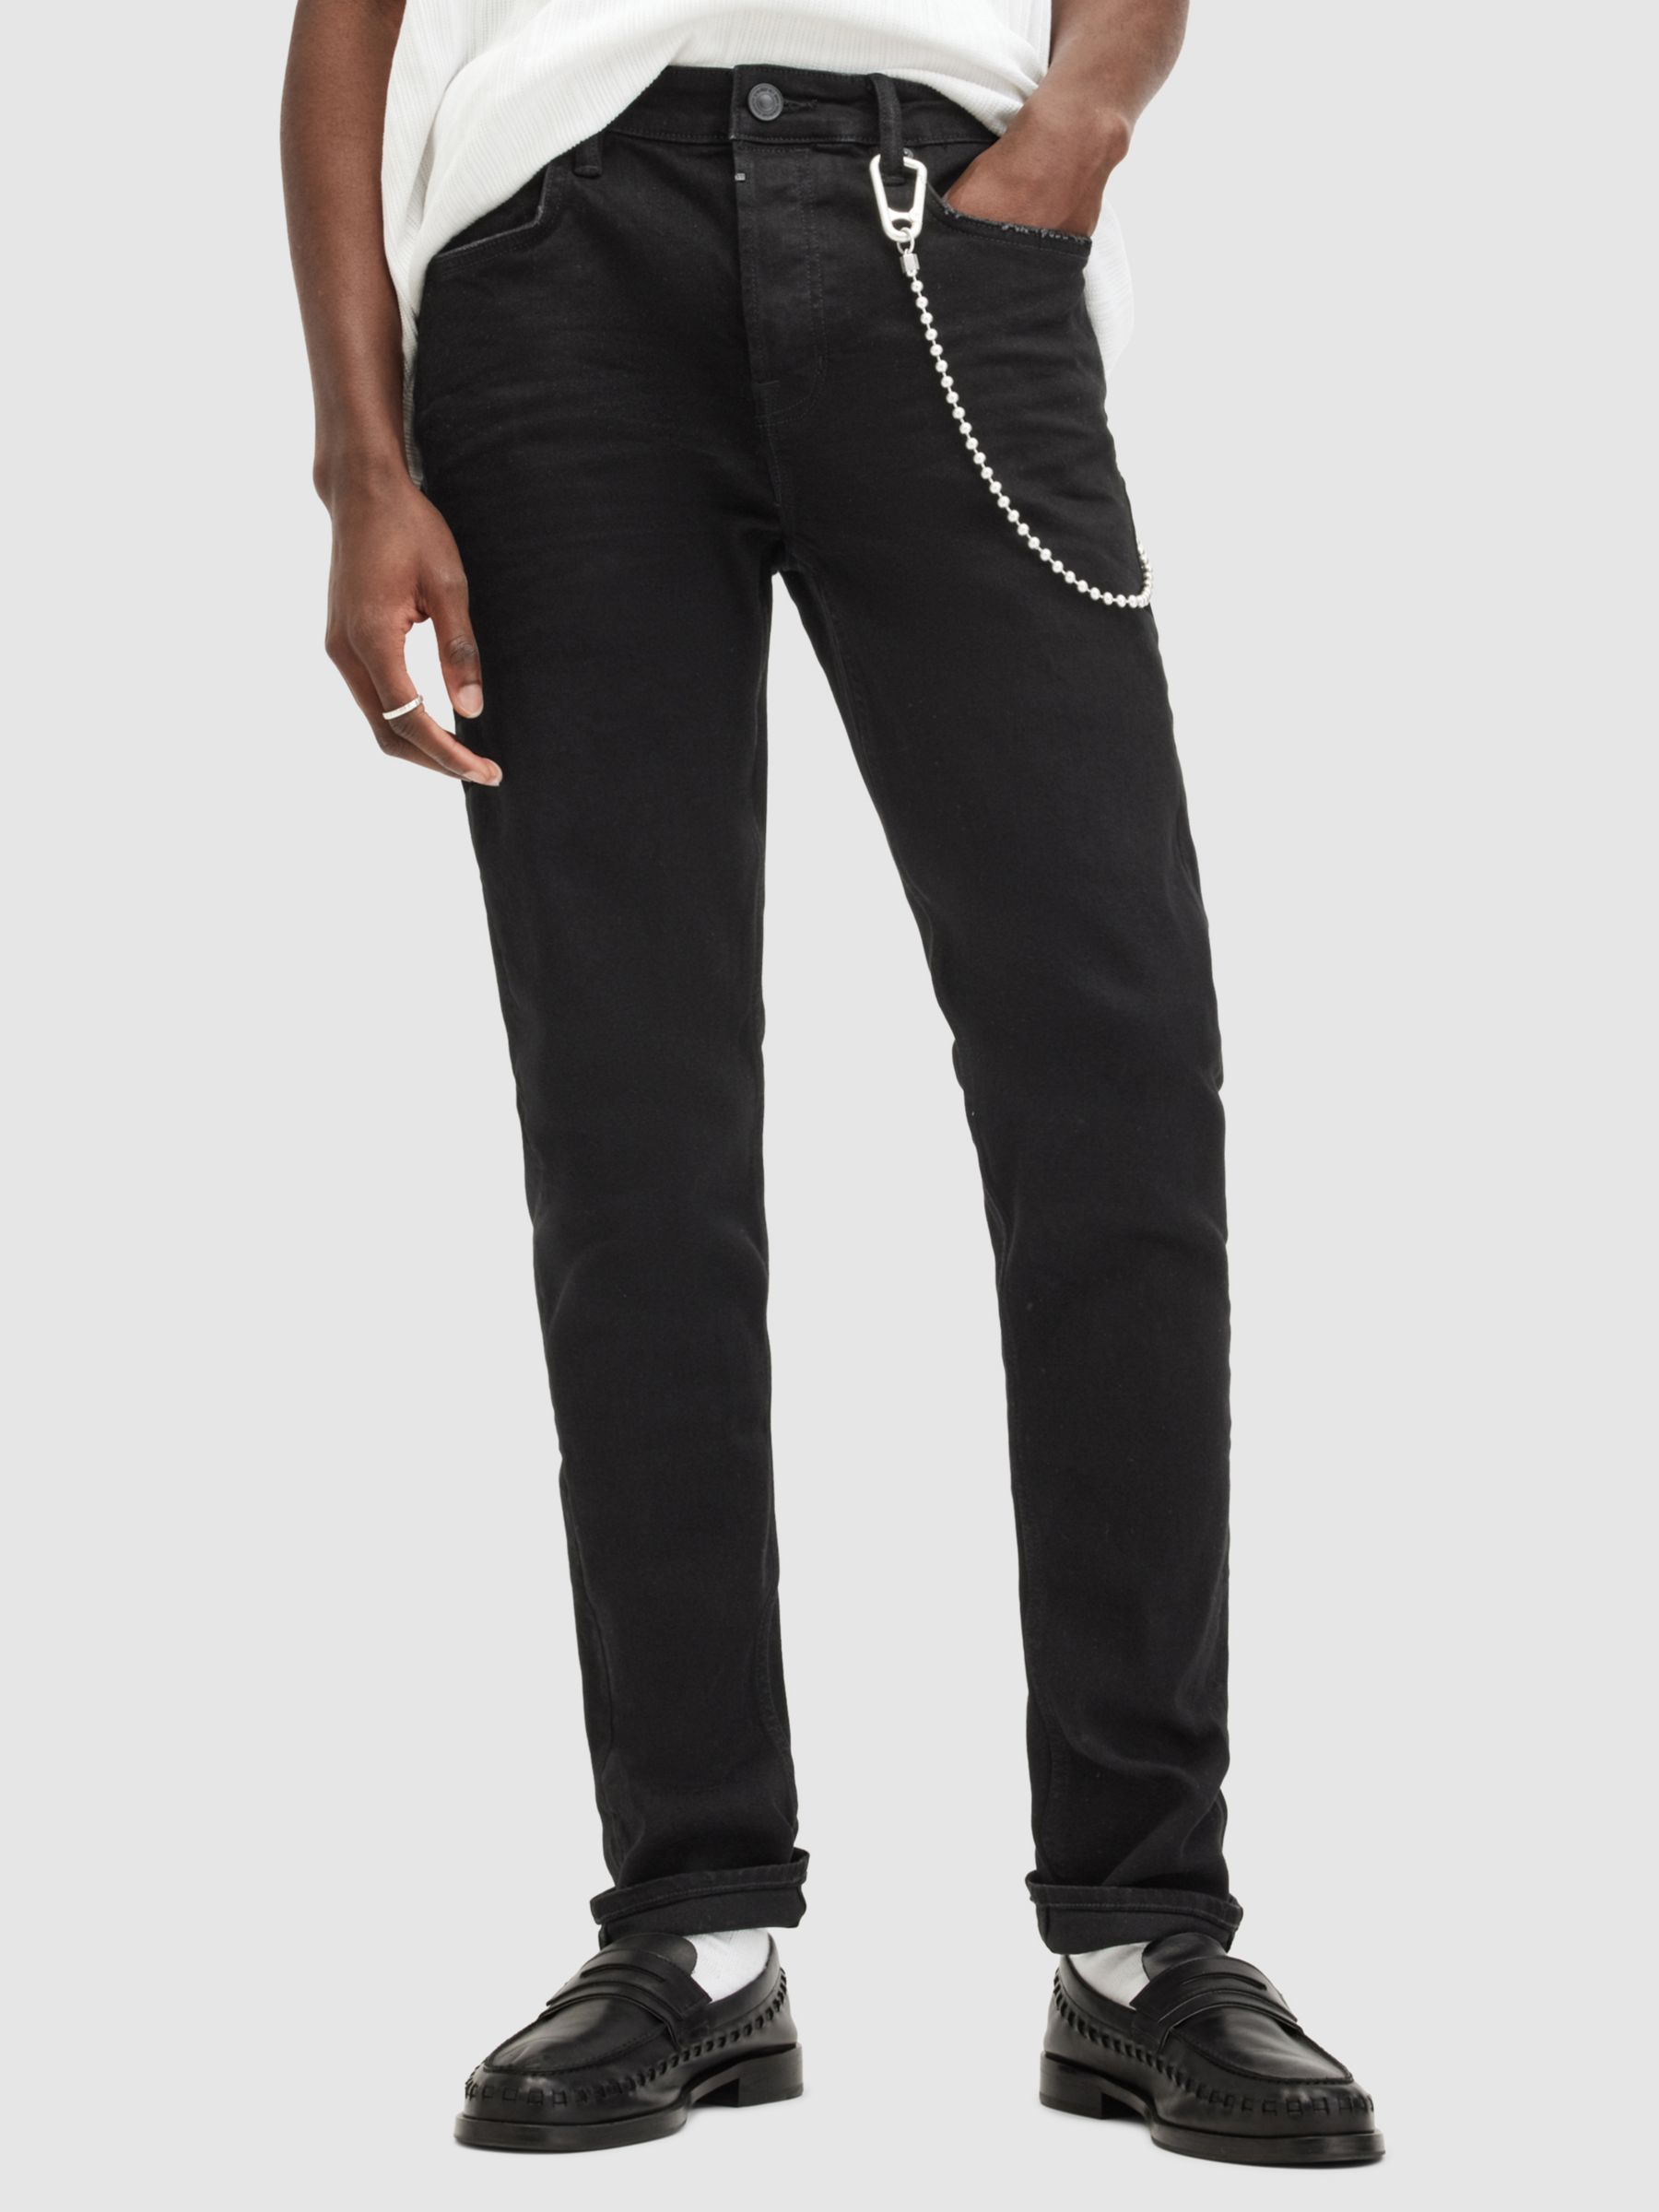 AllSaints Cigarette Slim Jeans, Jet Black, W34/L32